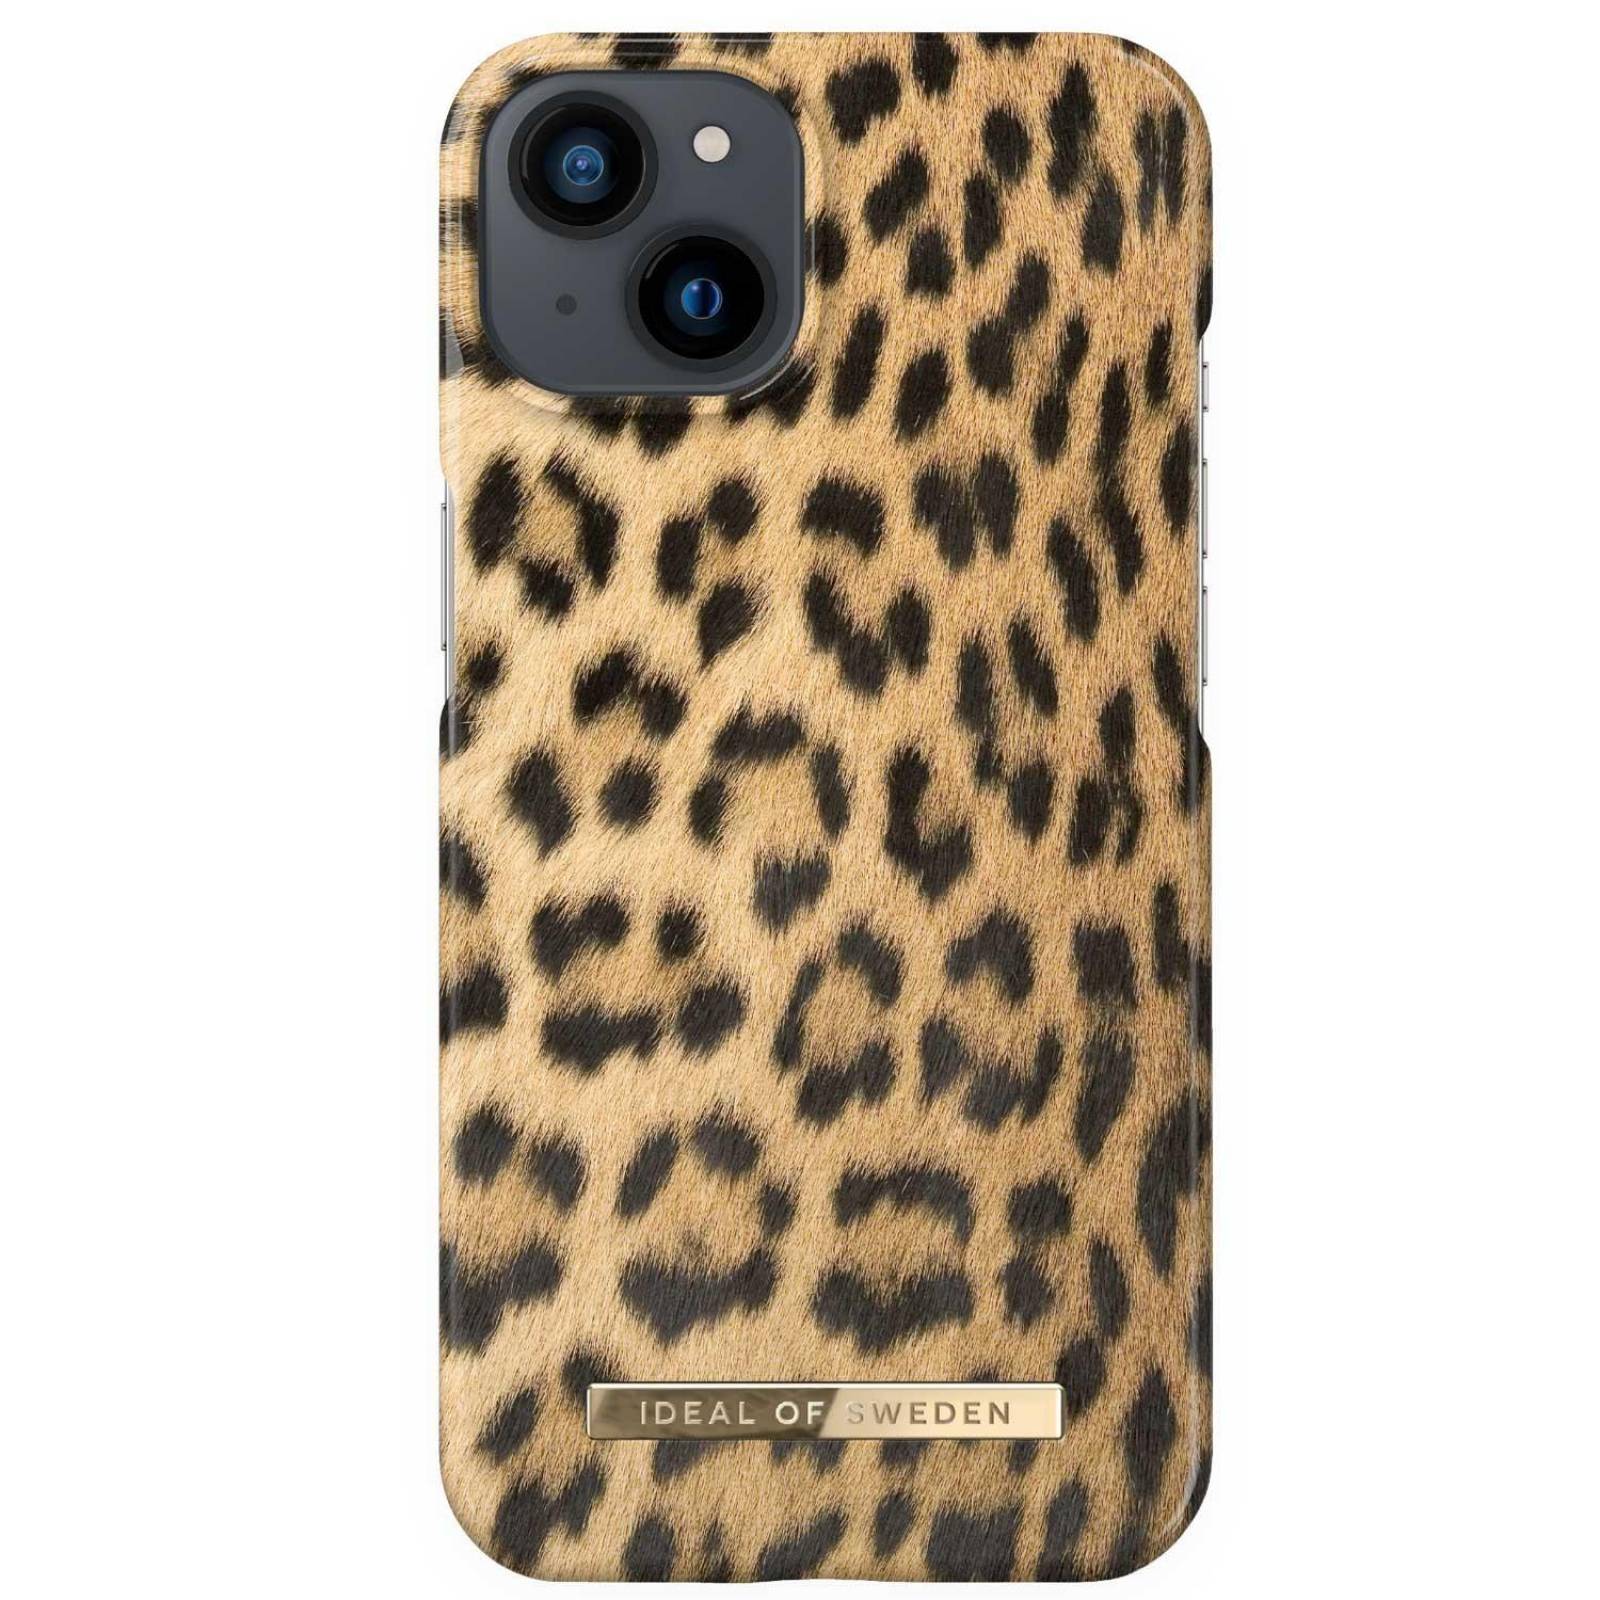 Carcasa Protectora para iPhone 13 Pro Max - Leopardo